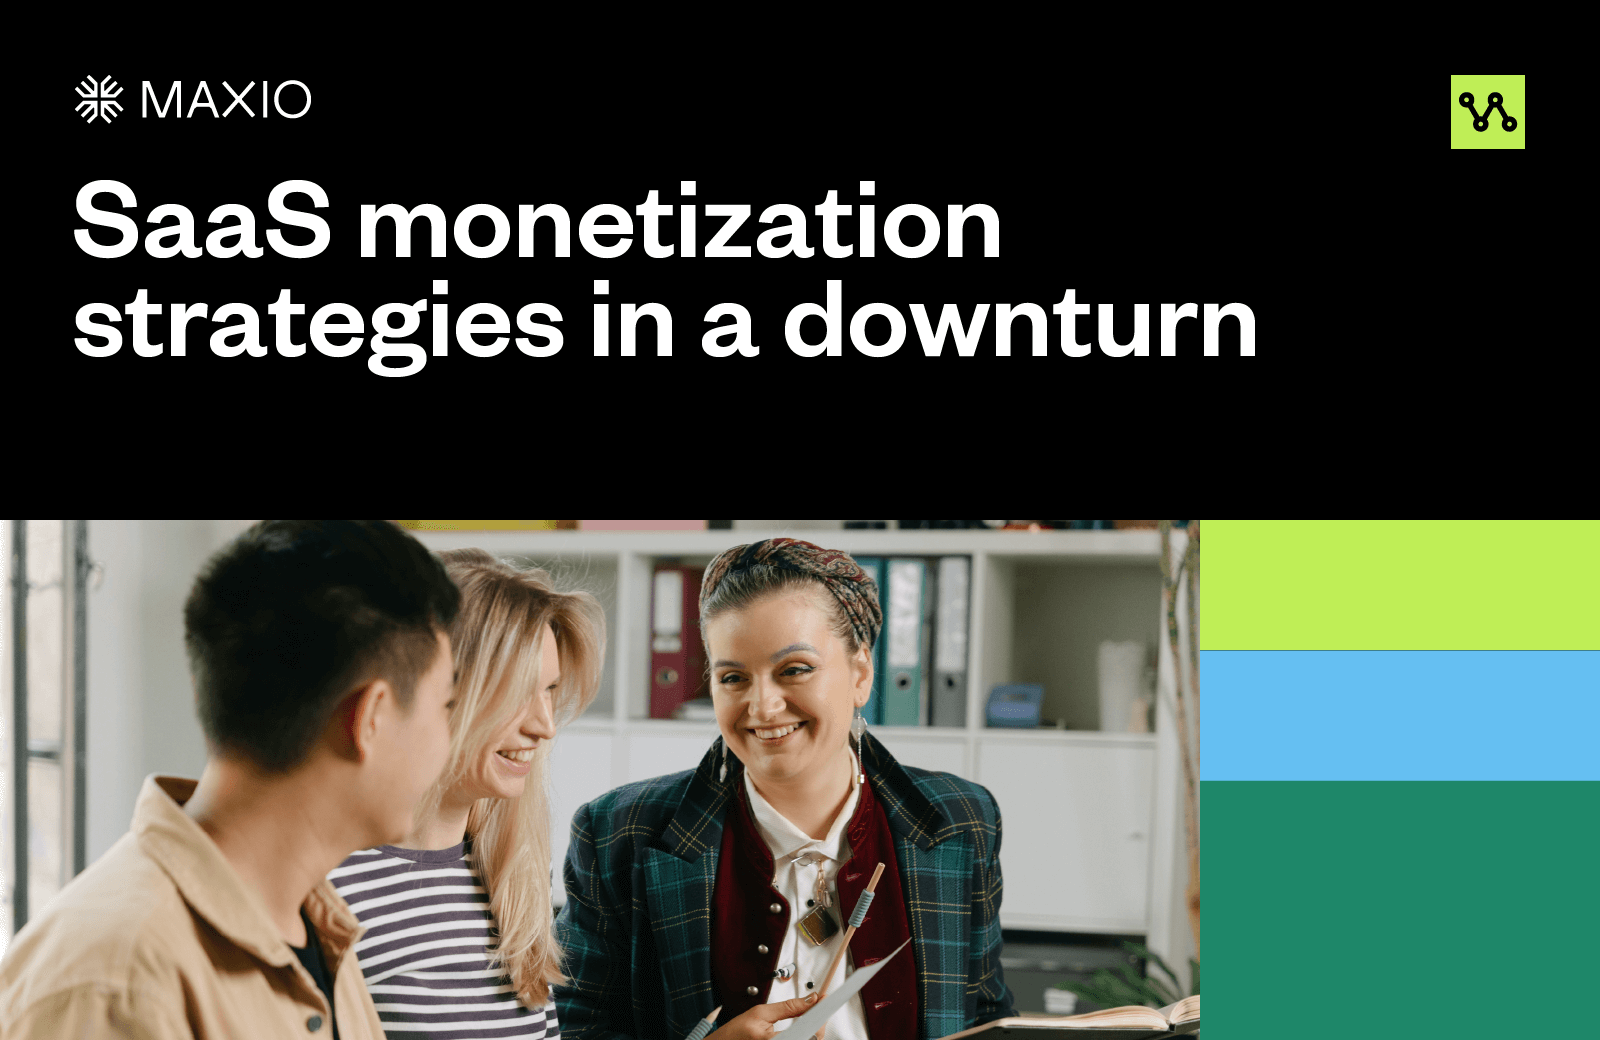 Image introducing SaaS monetization strategies in a downturn